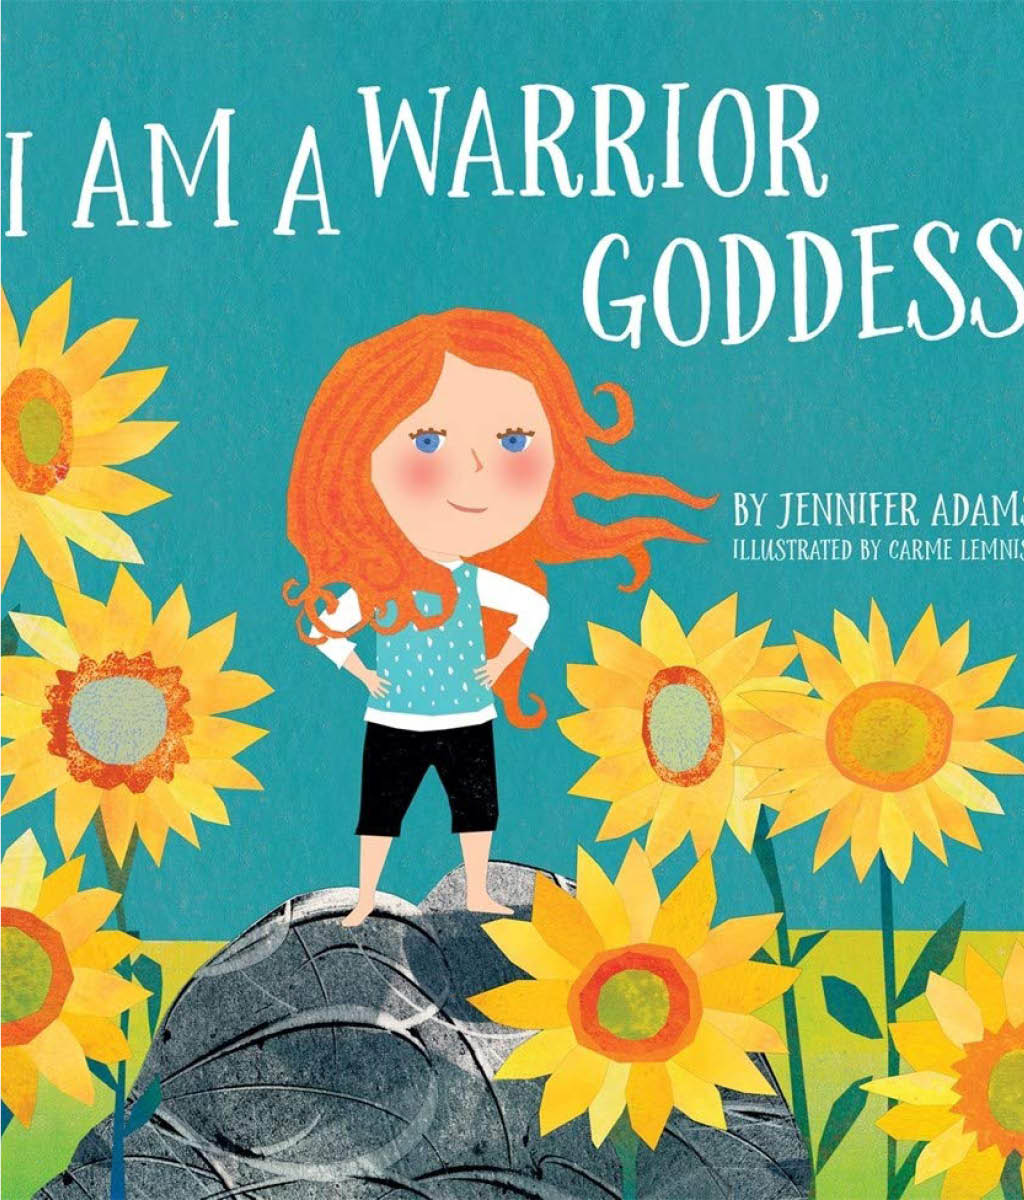 I Am a Warrior Goddess by Jennifer Adams